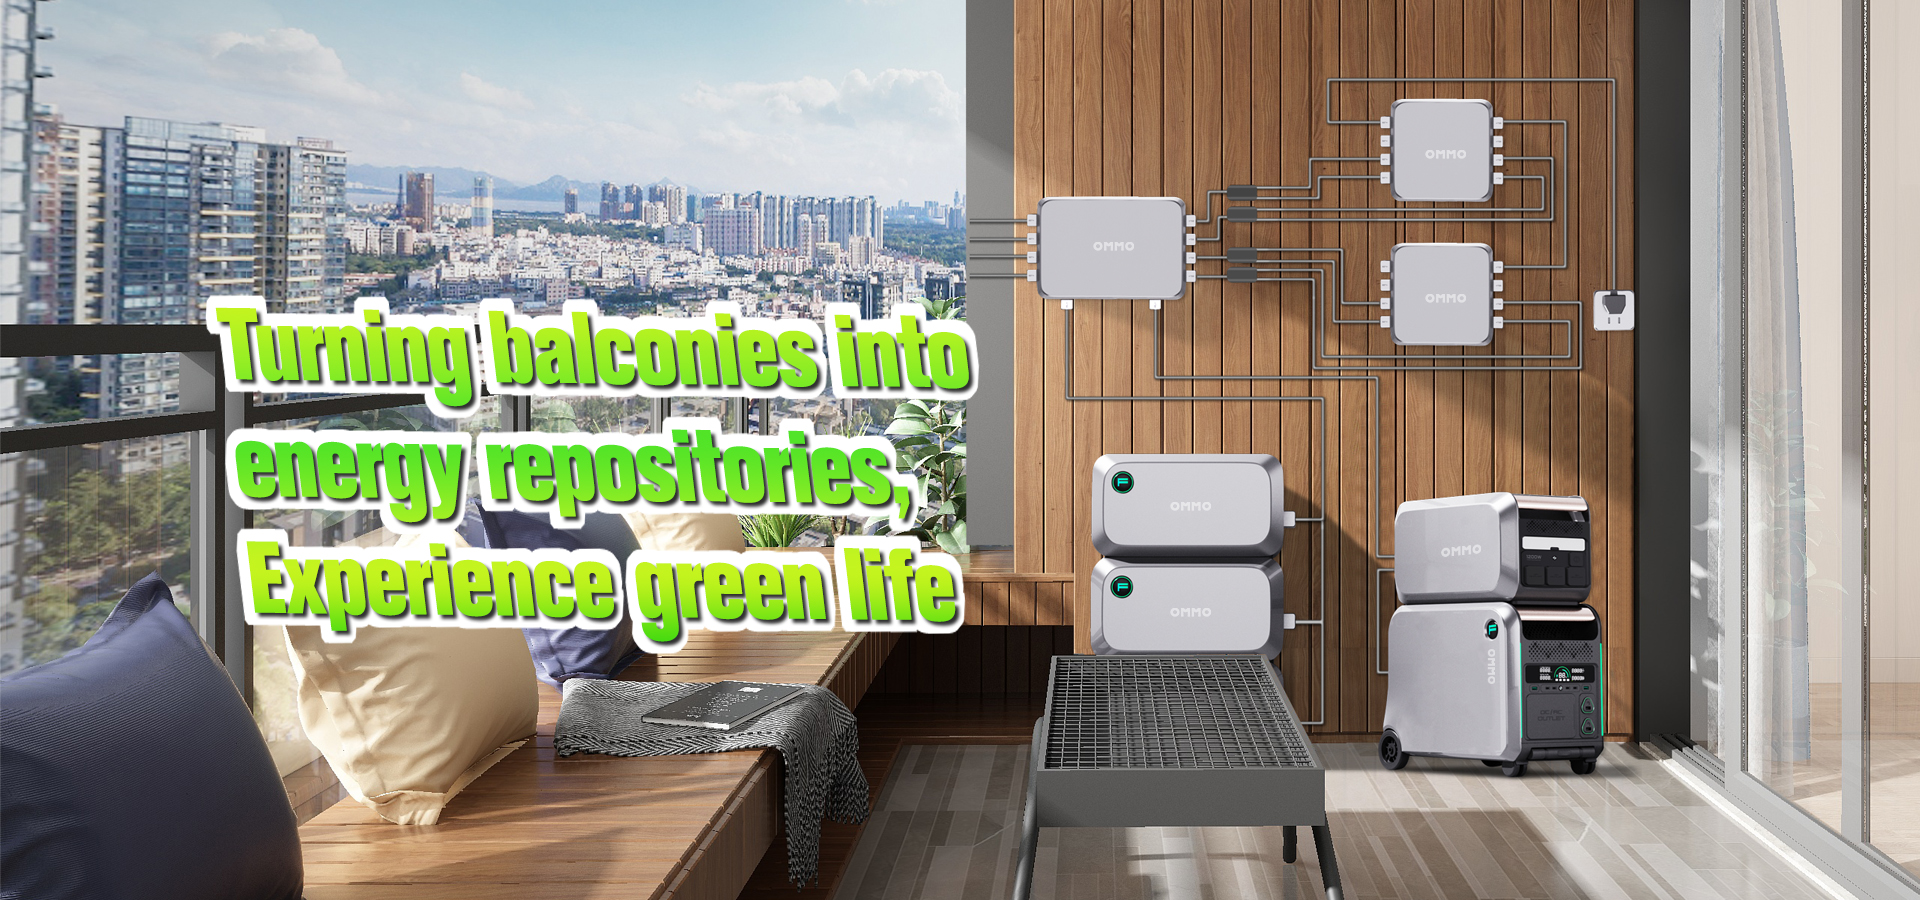 OMMO balcony energy storage system product introduction